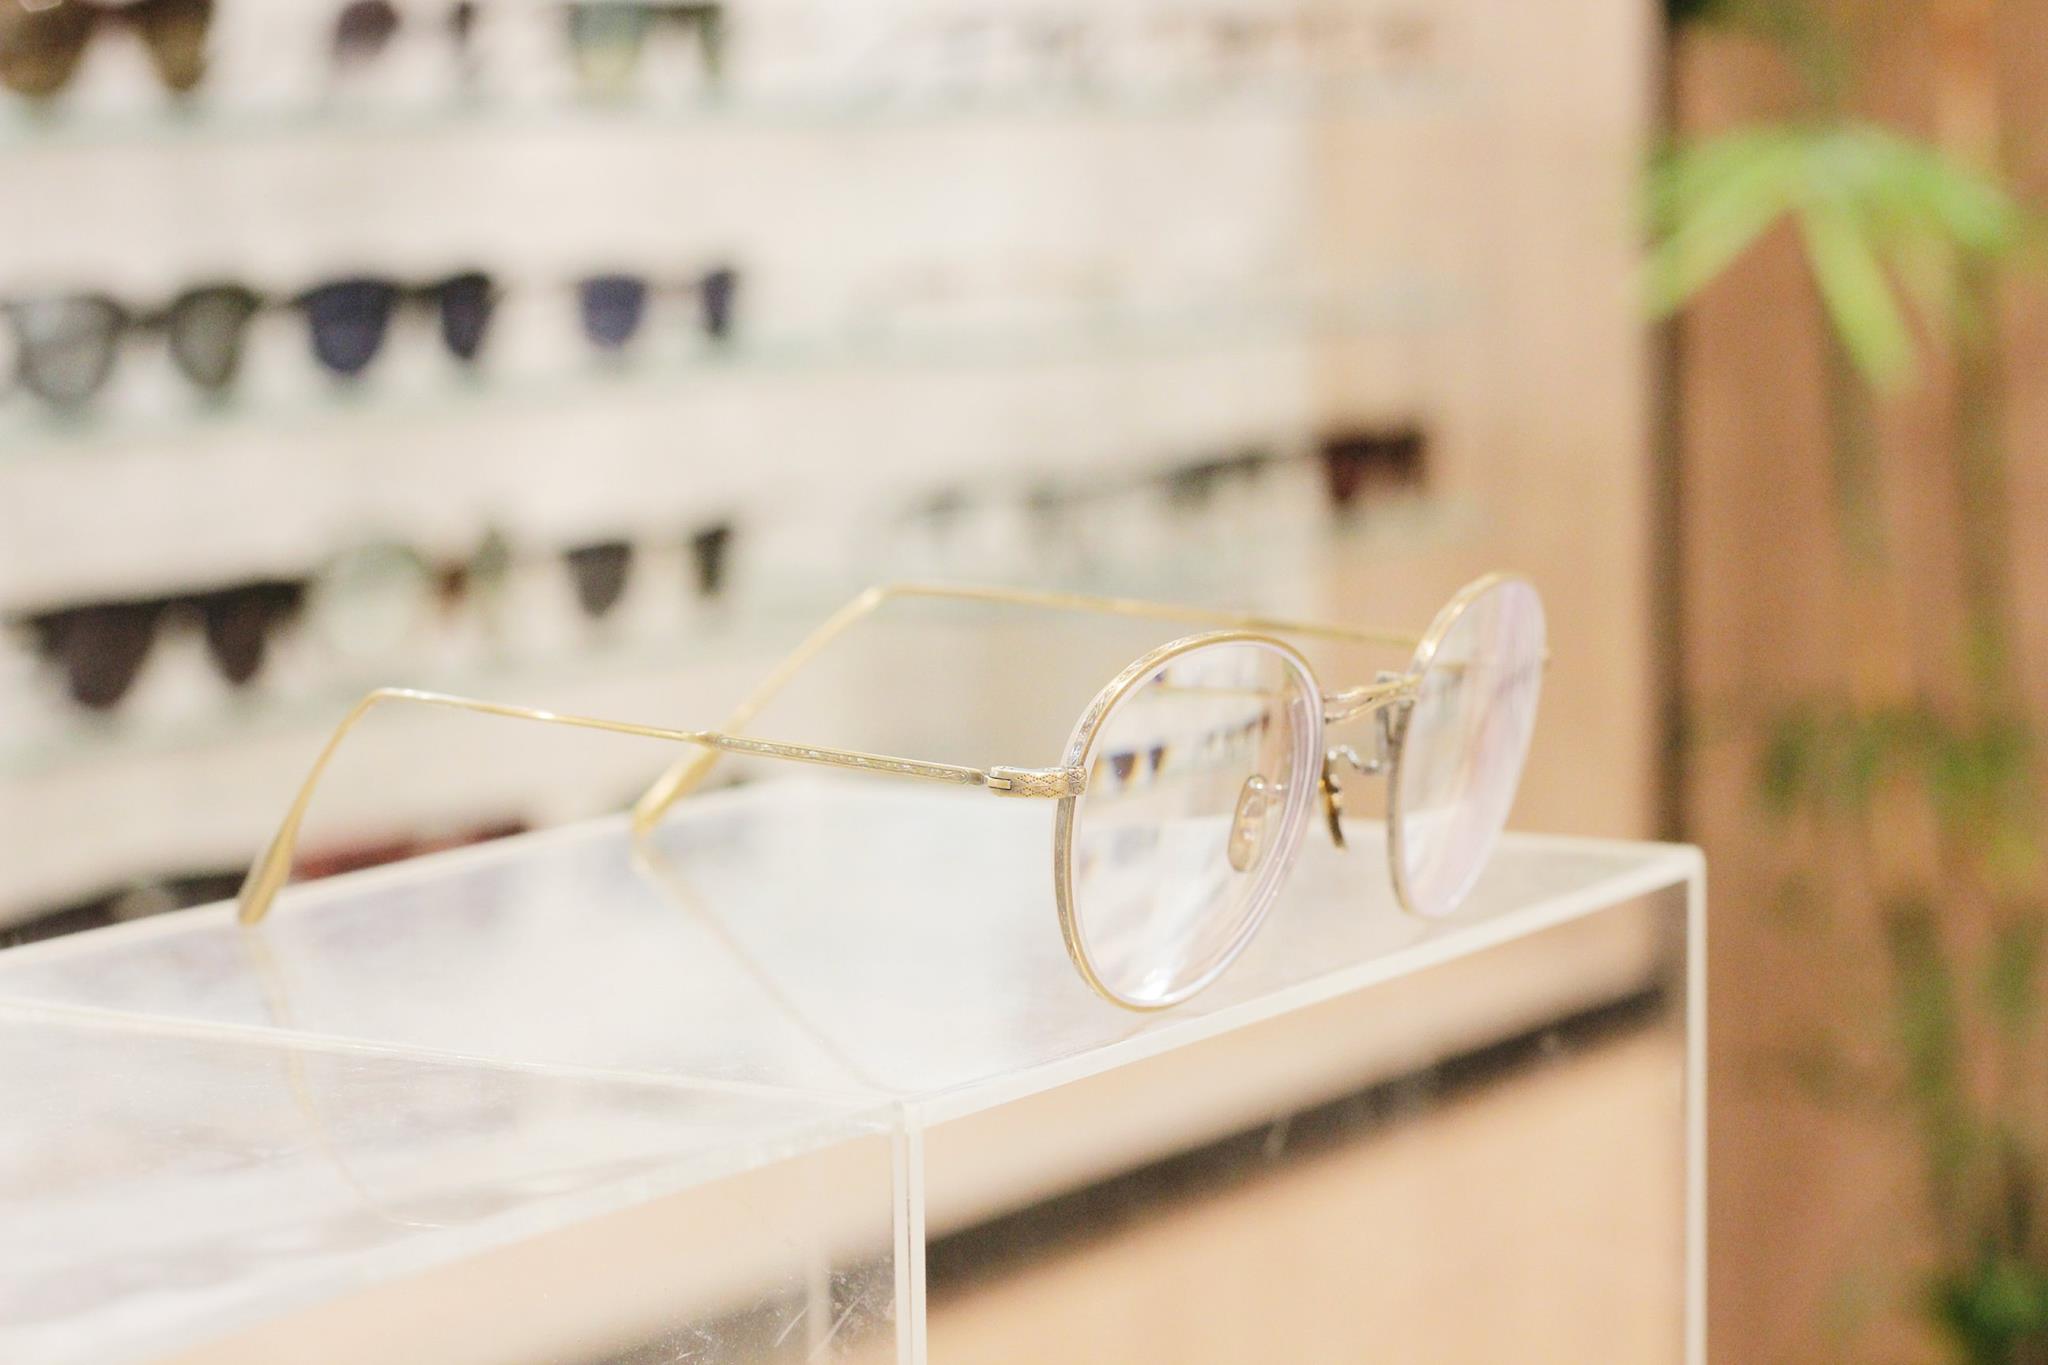 5 Best Optical and Sunglasses Shop in Singapore Shop Buy Prescription Glasses Singapore 2018 Cheap Good Optic Butler dh Sunglass Atlantic Optical